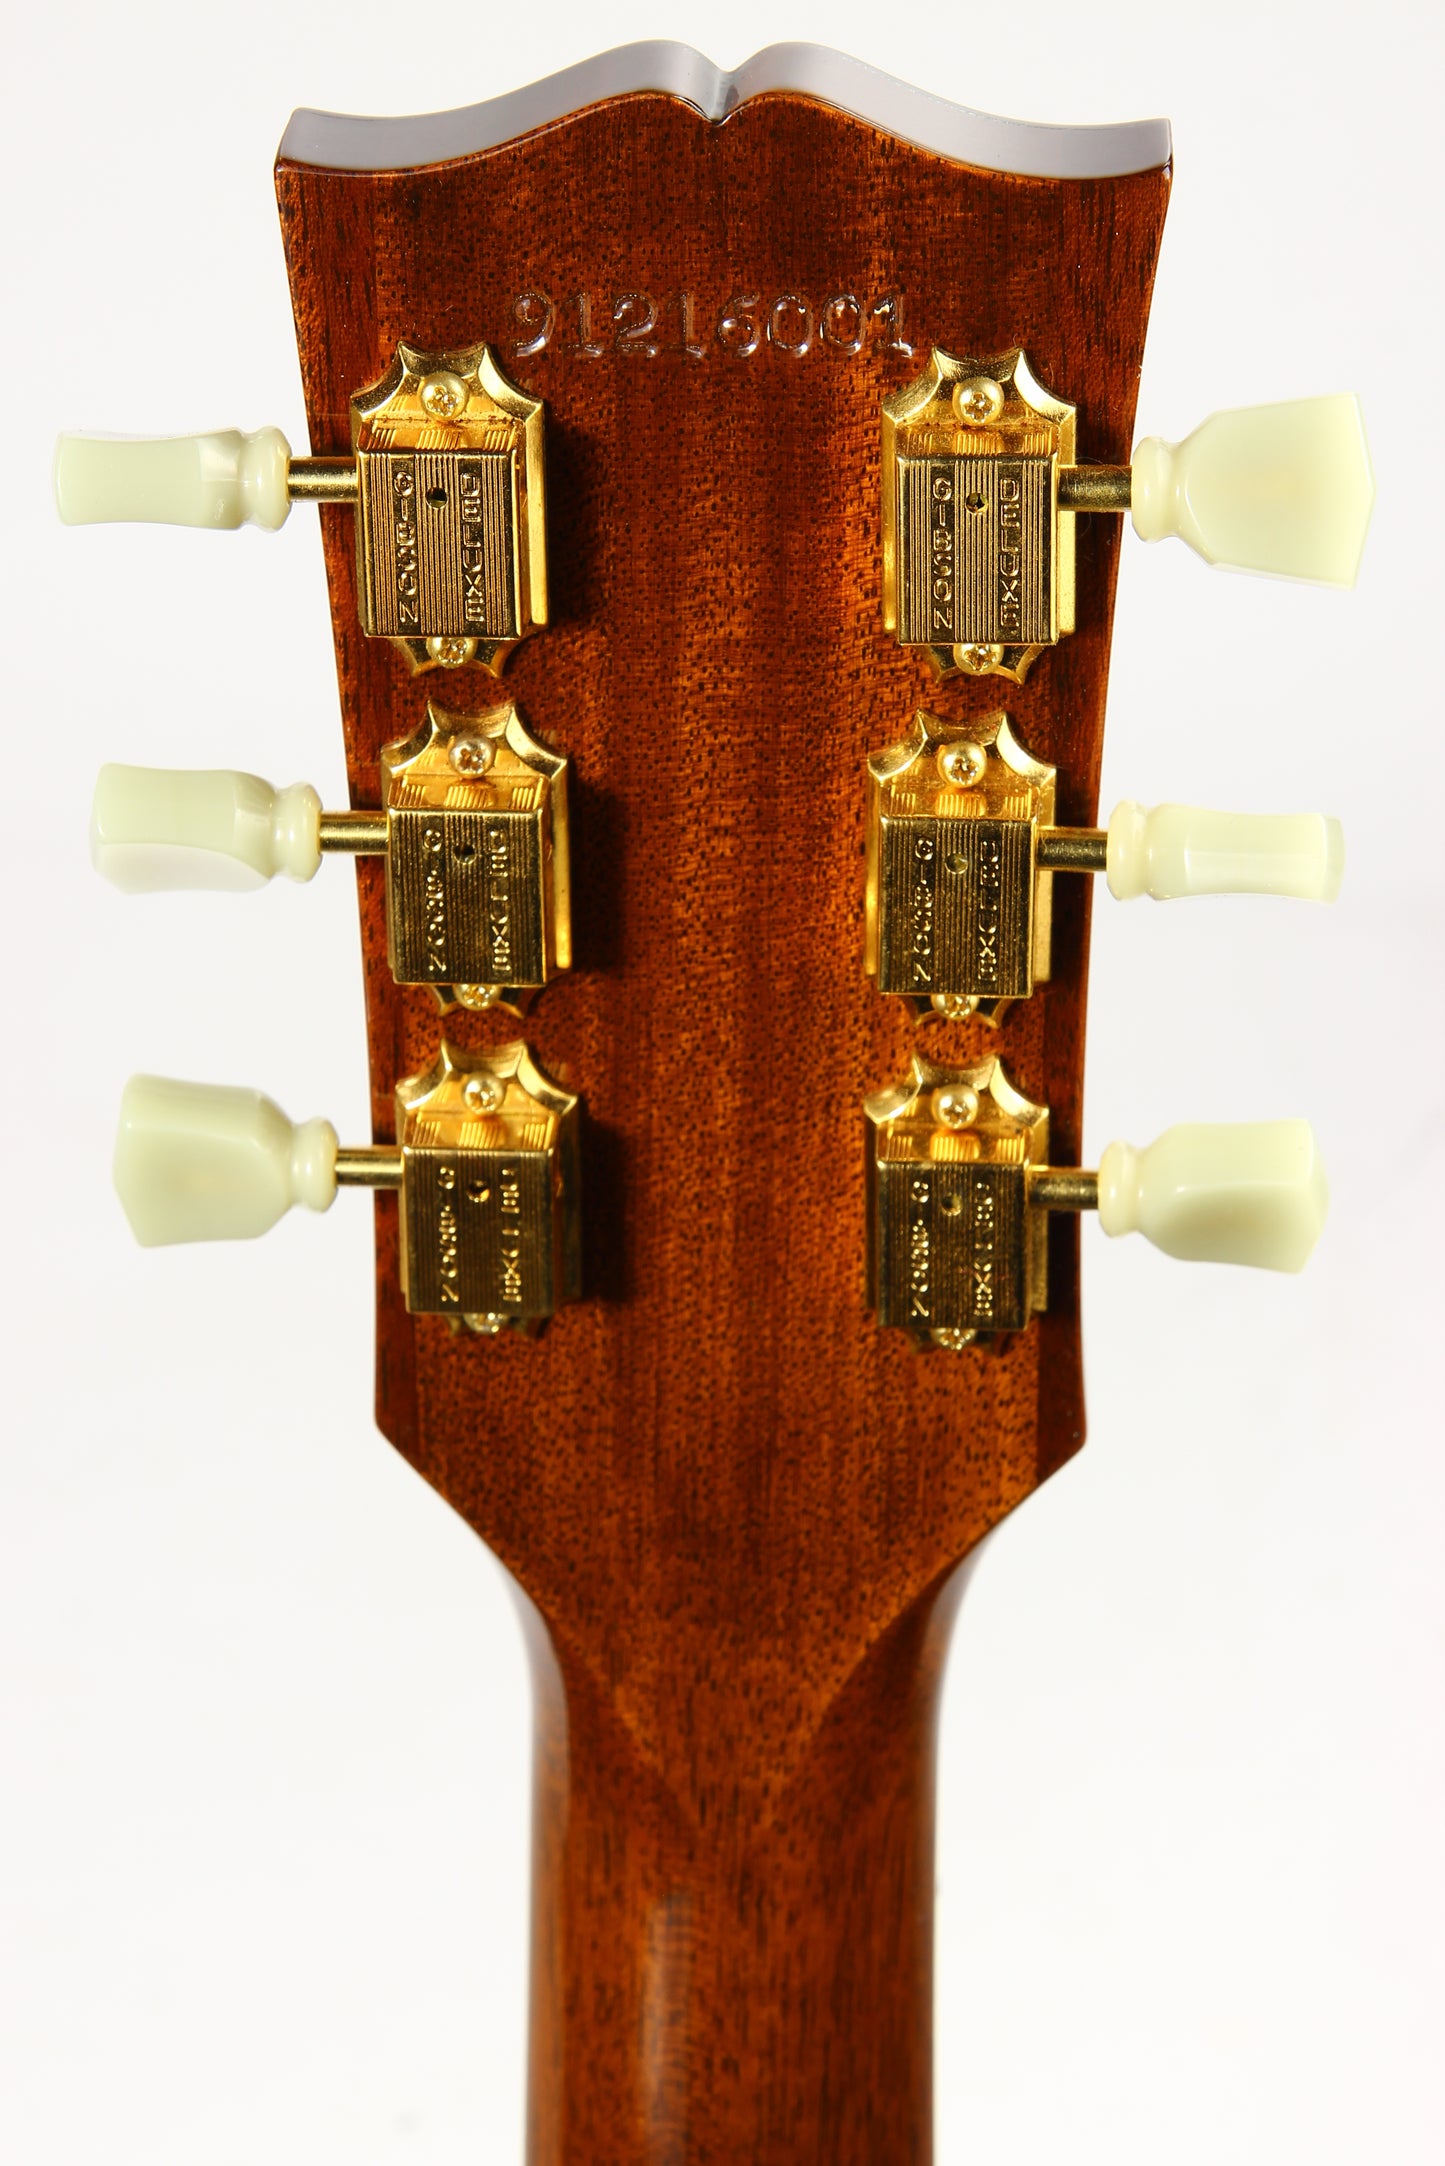 1996 Gibson Custom Shop Historic L-4 CES Sunburst - Solid Spruce Carved Top, ES-175 L4 CES L5